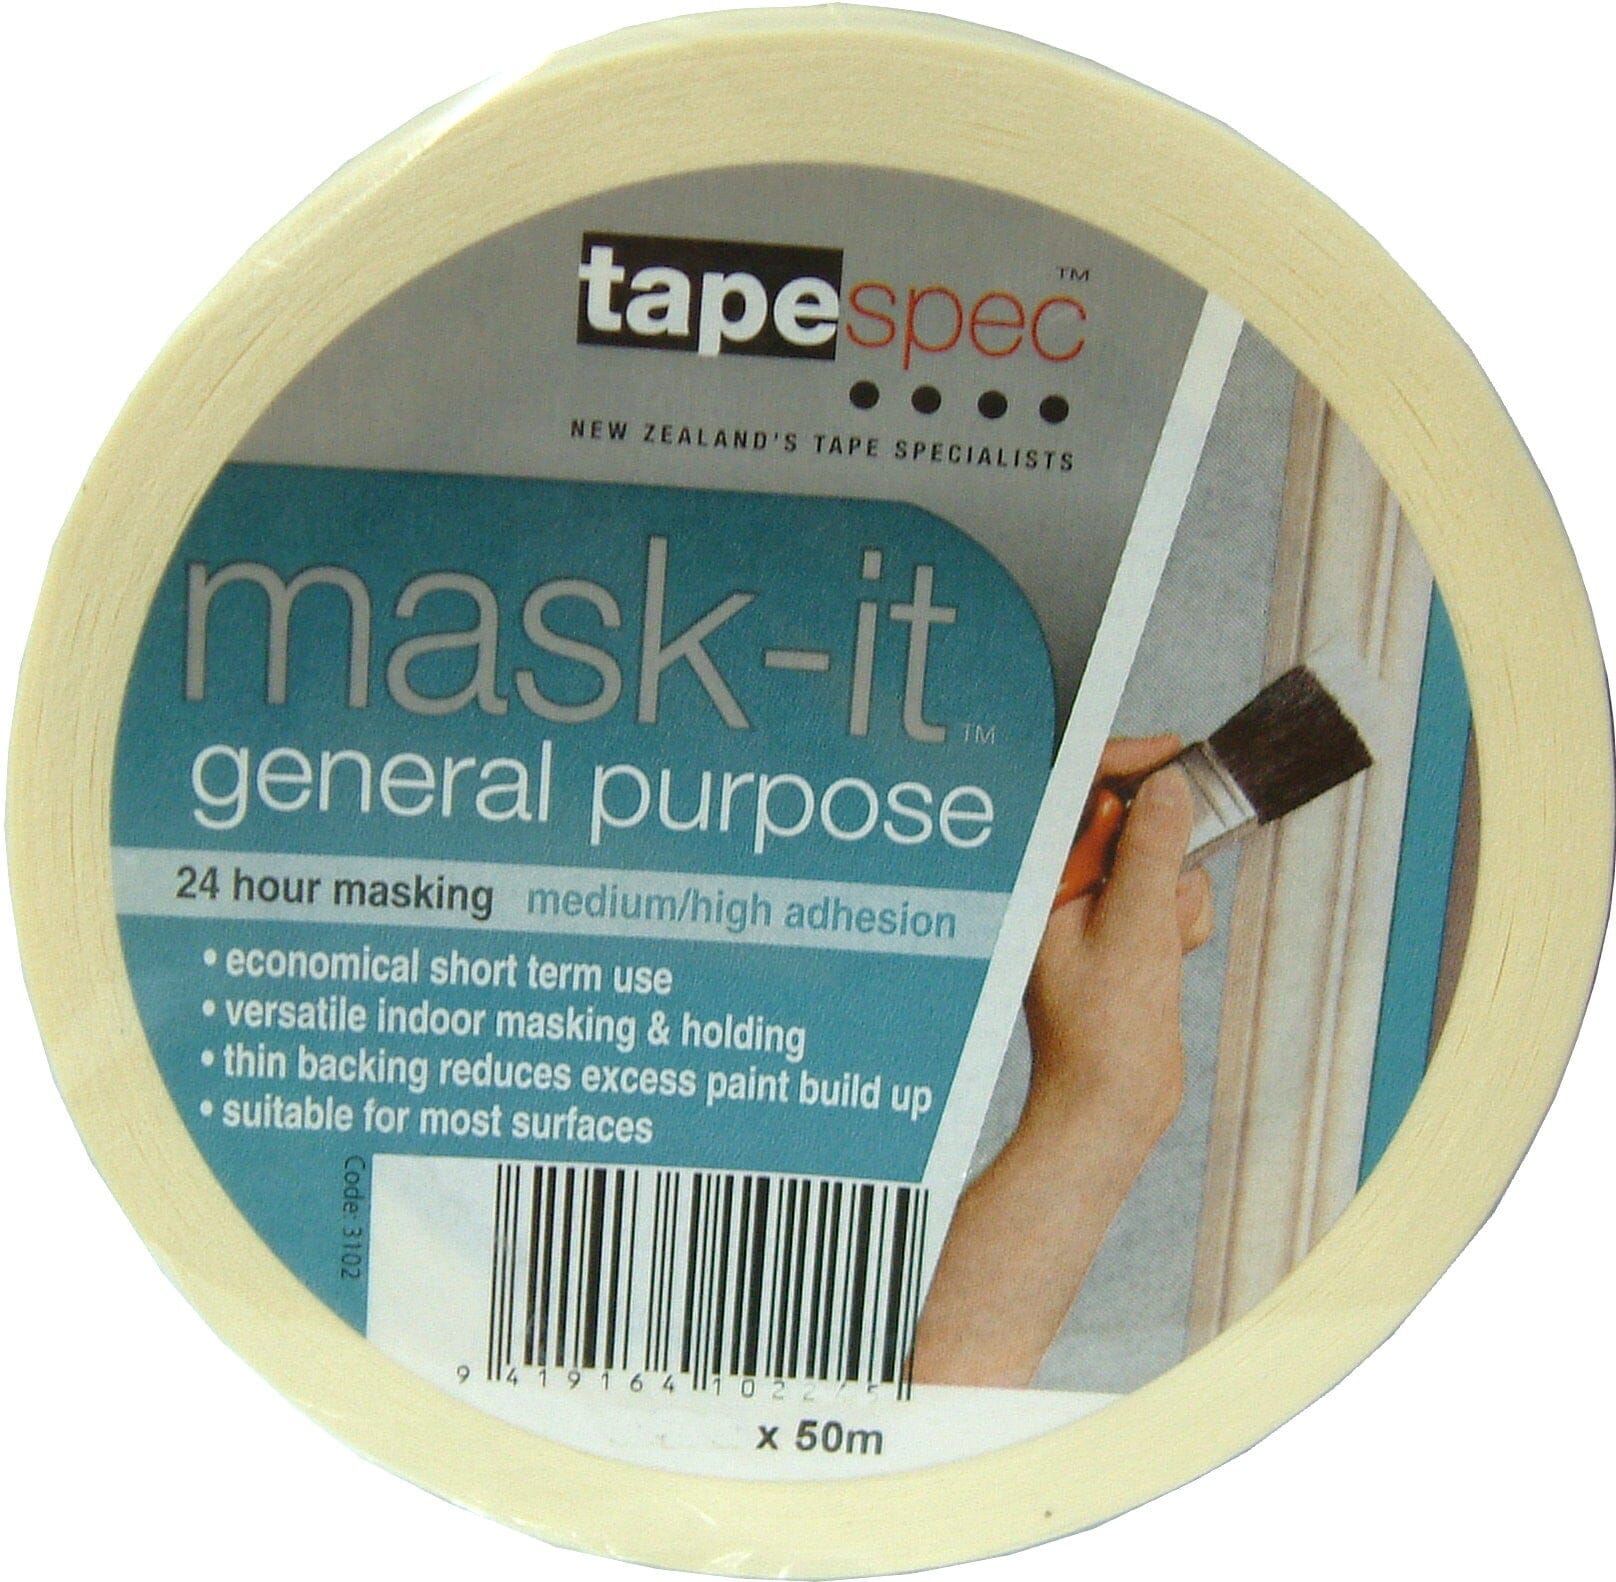 Tapespec Masking Tape - 50m Roll #312 36mm Mask-it